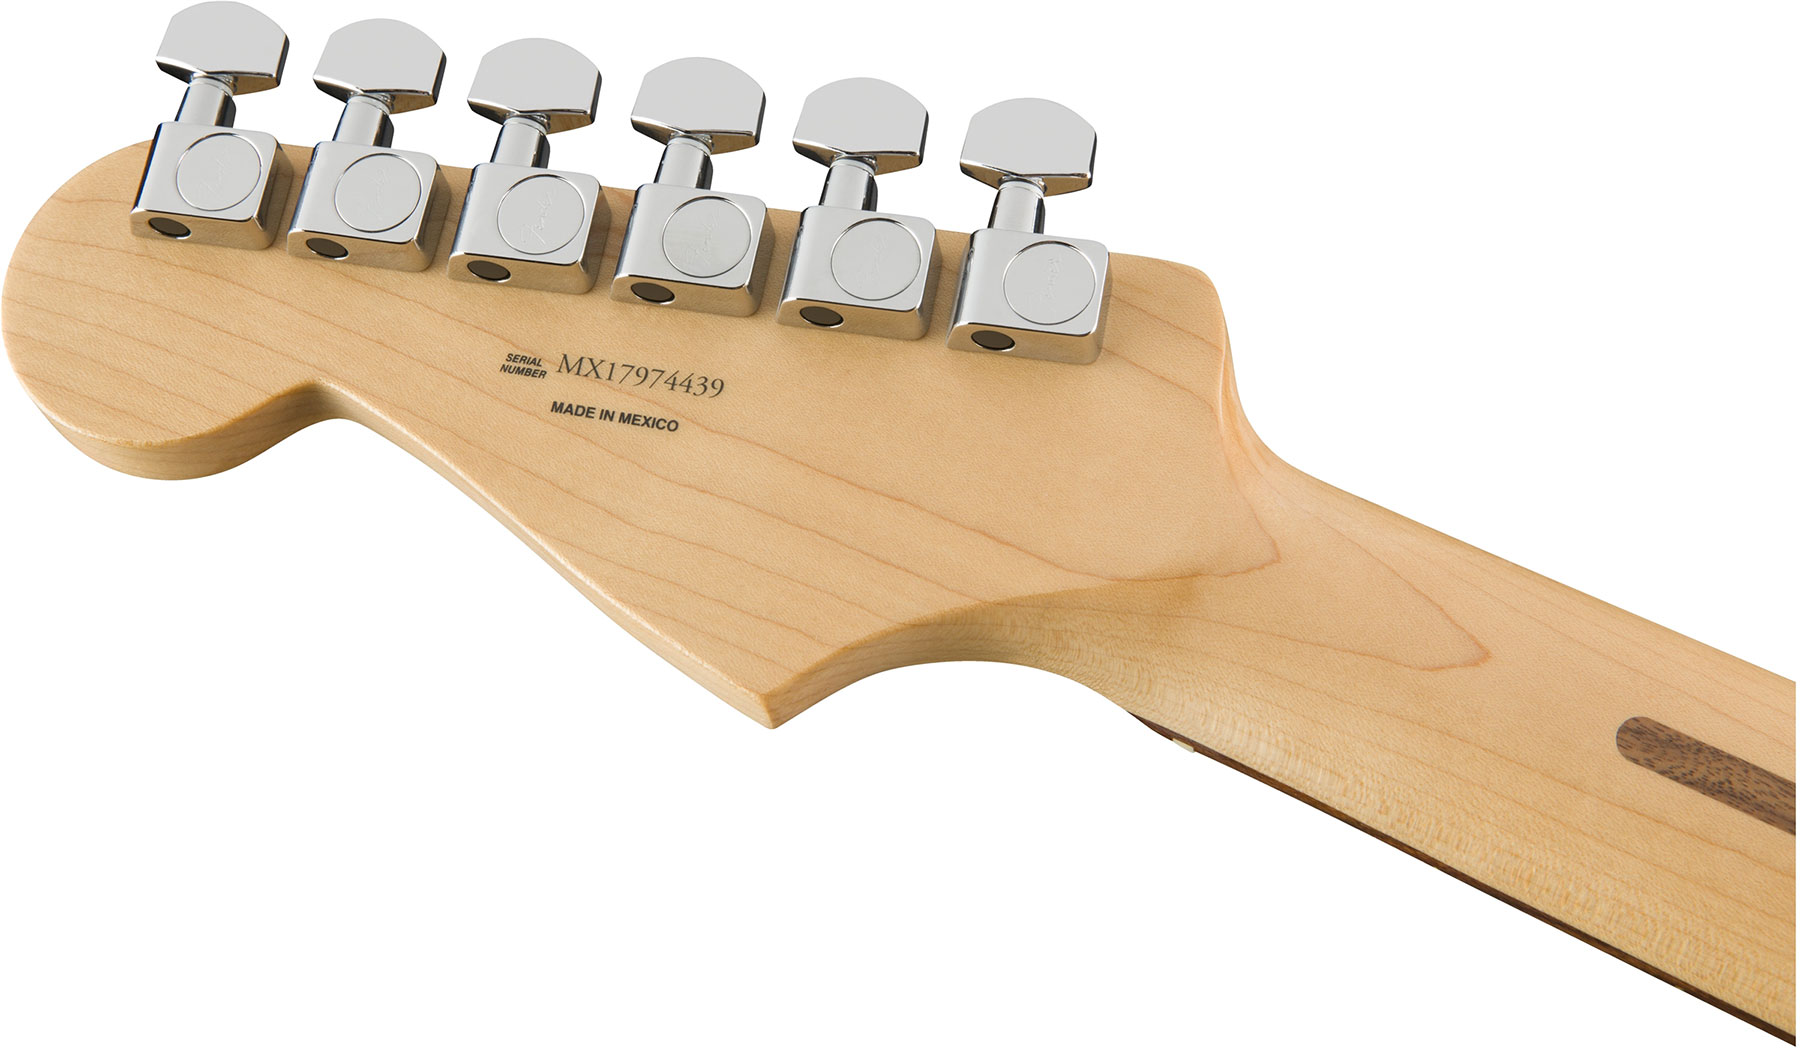 Fender Strat Player Mex Sss Pf - Polar White - Guitare Électrique Forme Str - Variation 4